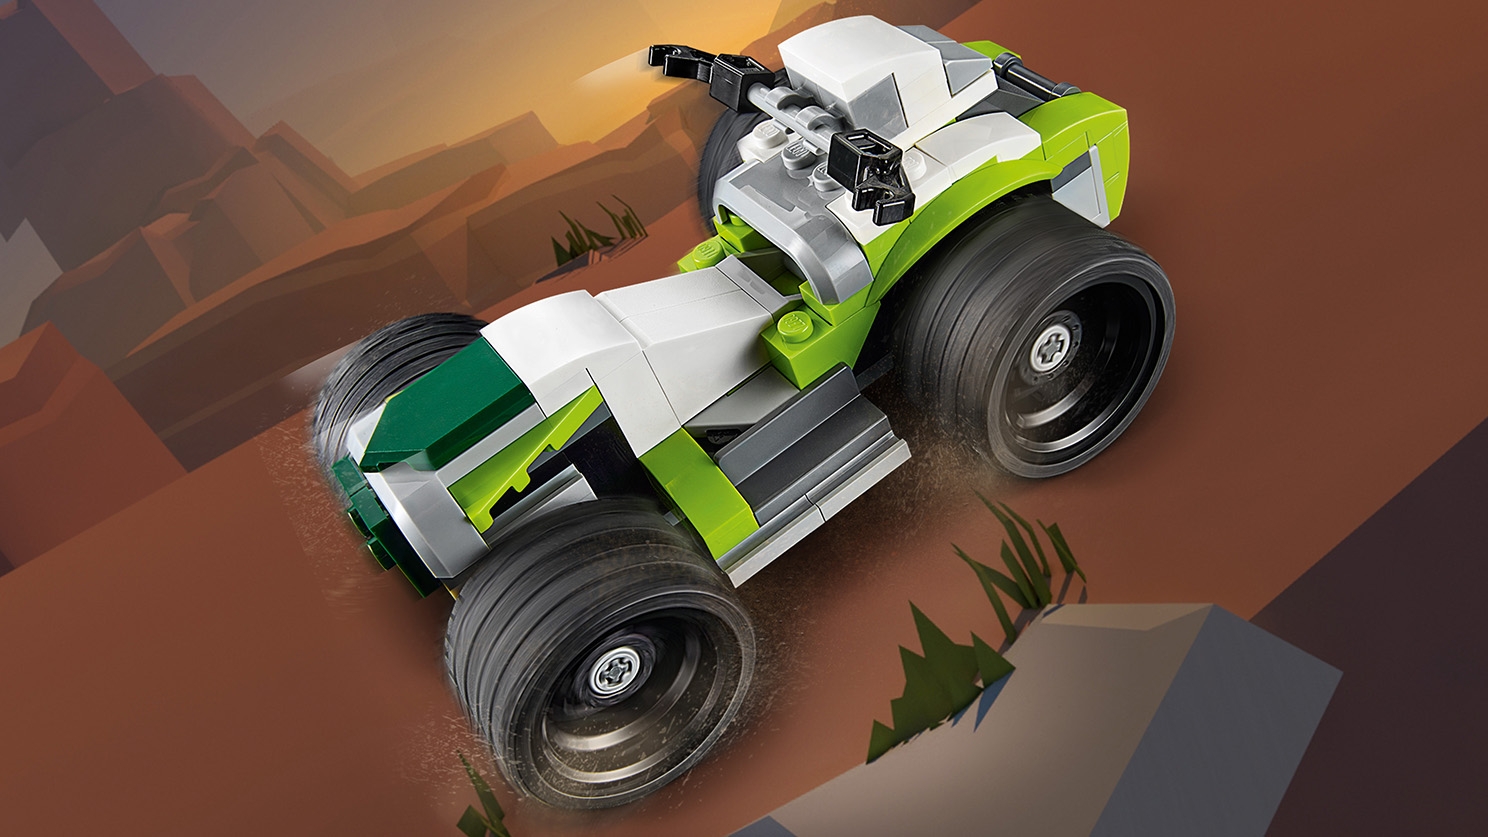 Creator 3in1 - Le camion-fusée (31103) LEGO